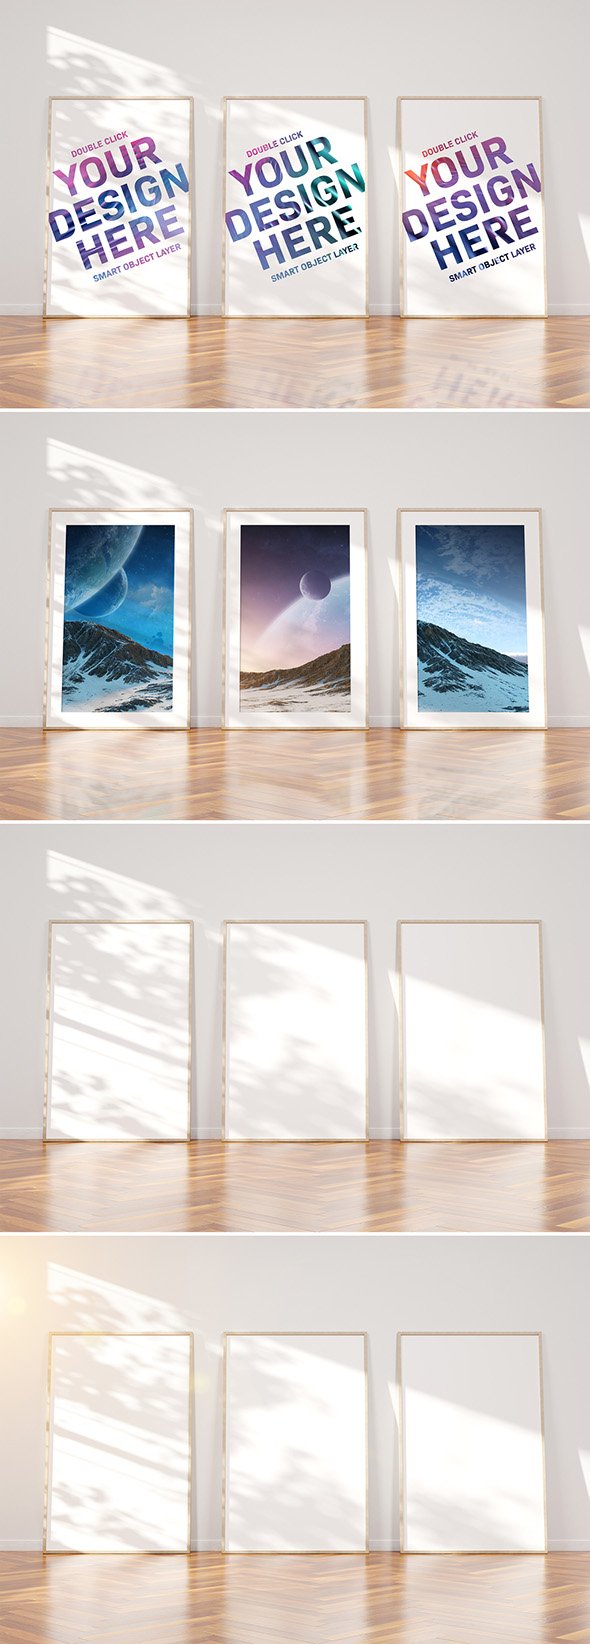 AdobeStock - 3 Vertical Wooden Frames Laying in Interior Mockup - 263752772